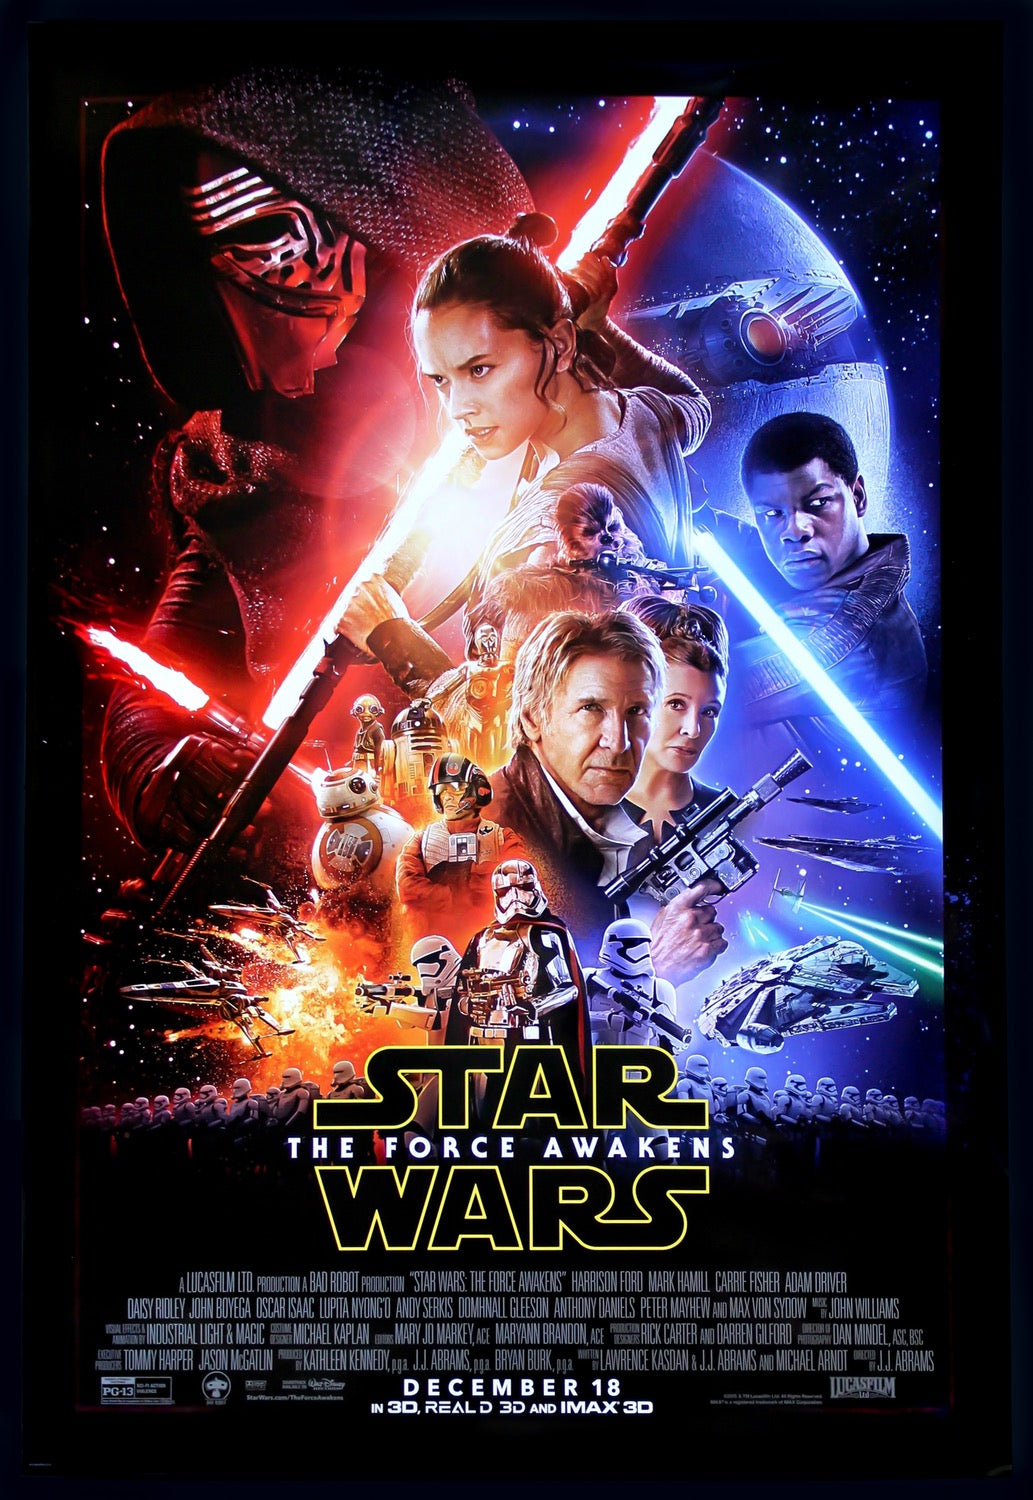 Star Wars: Episode VII - The Force Awakens (2015) original movie poster for sale at Original Film Art